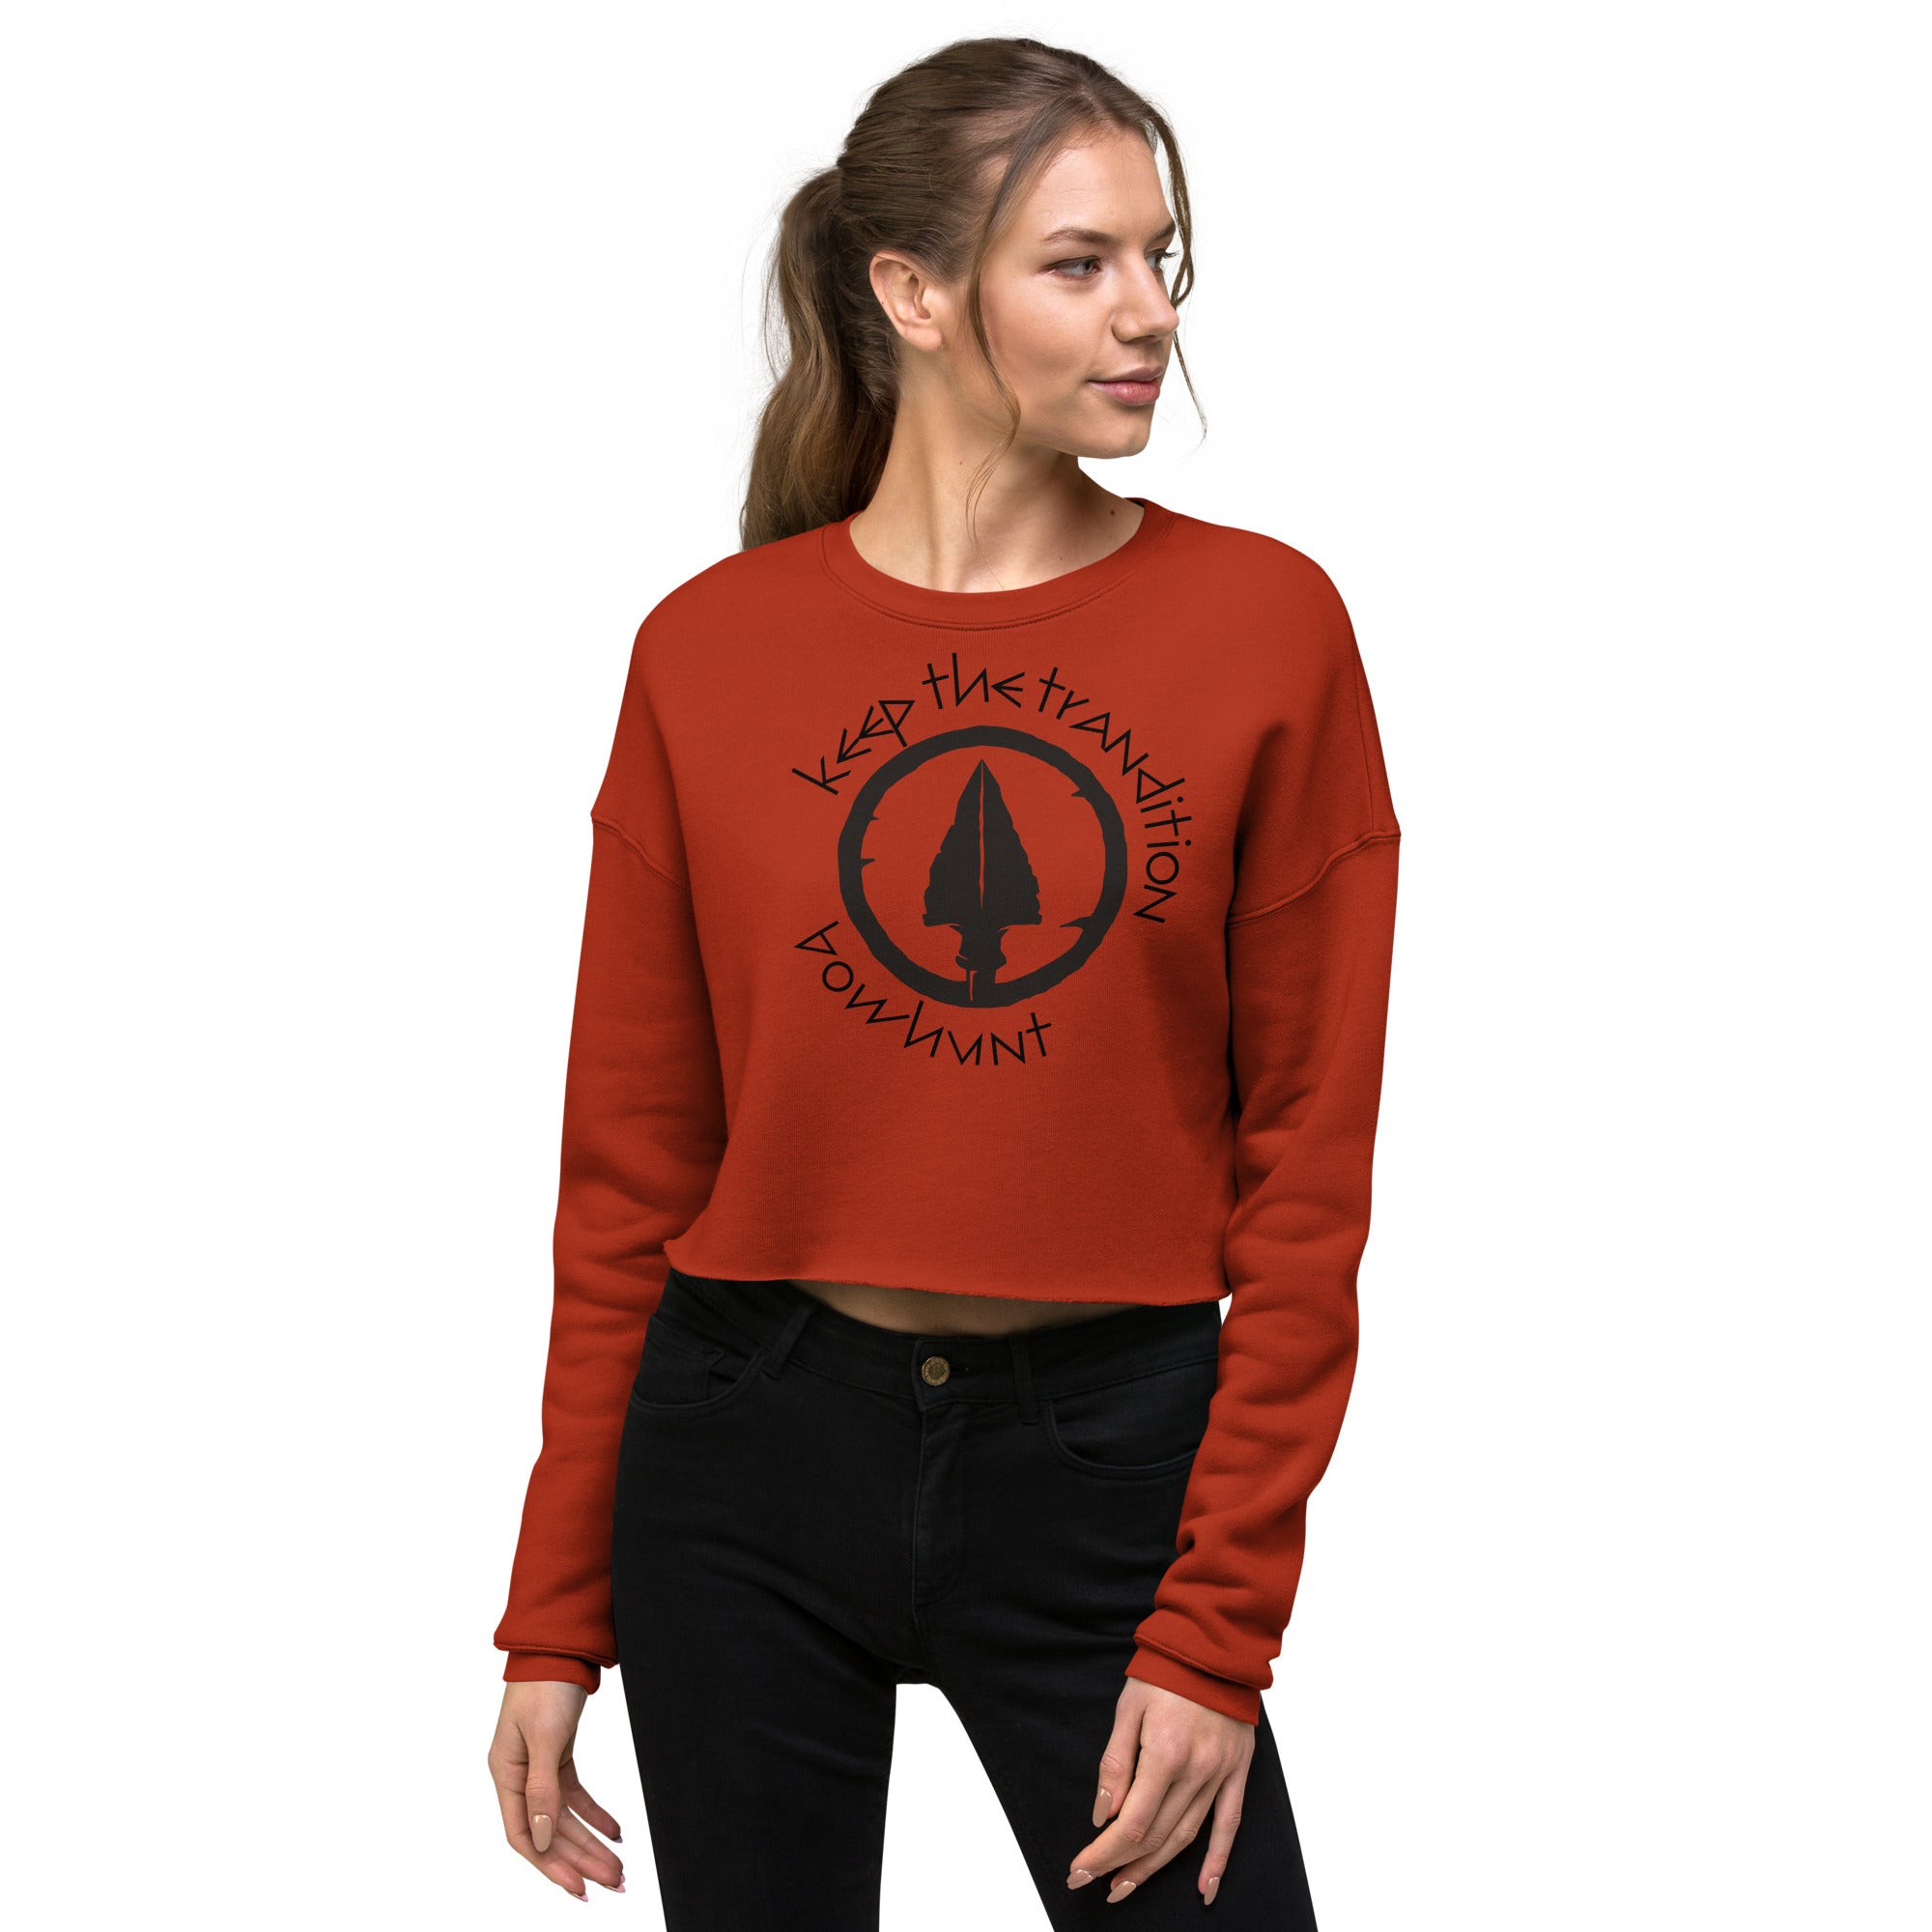 Keep The Tradition Women's Crop Sweatshirt - Bow Hunt